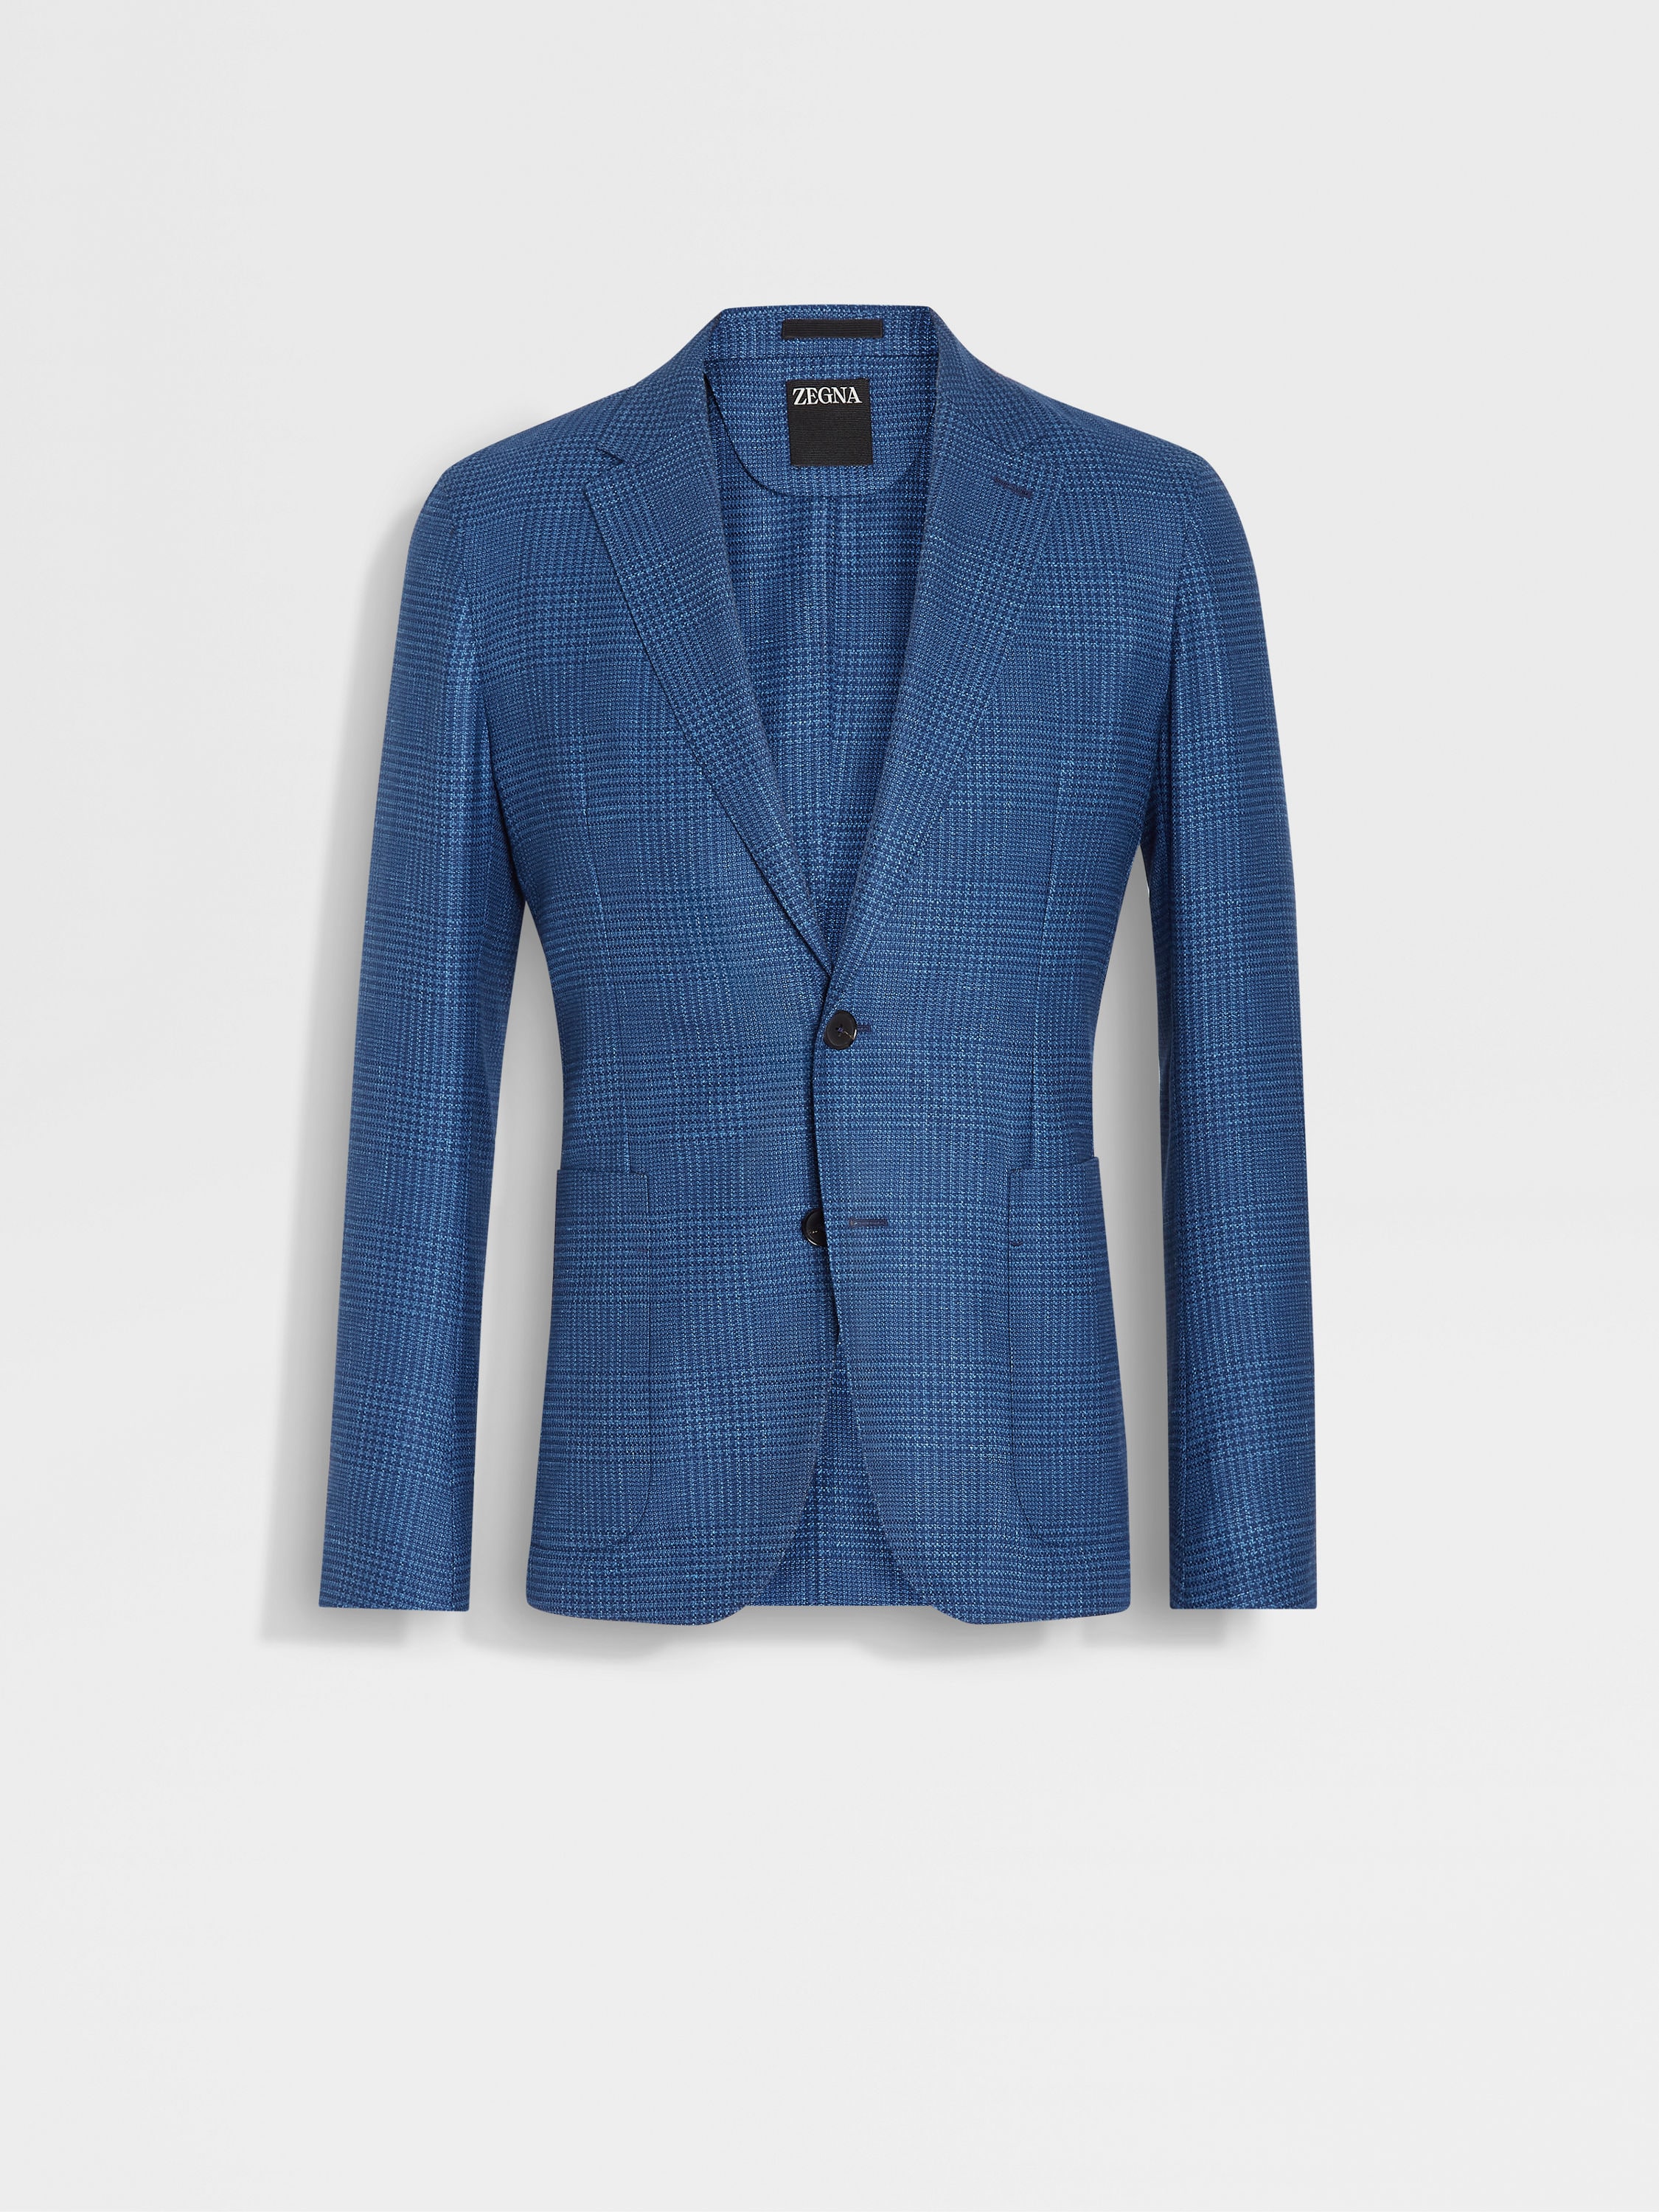 Utility Blue Cashmere Silk and Linen Shirt Jacket